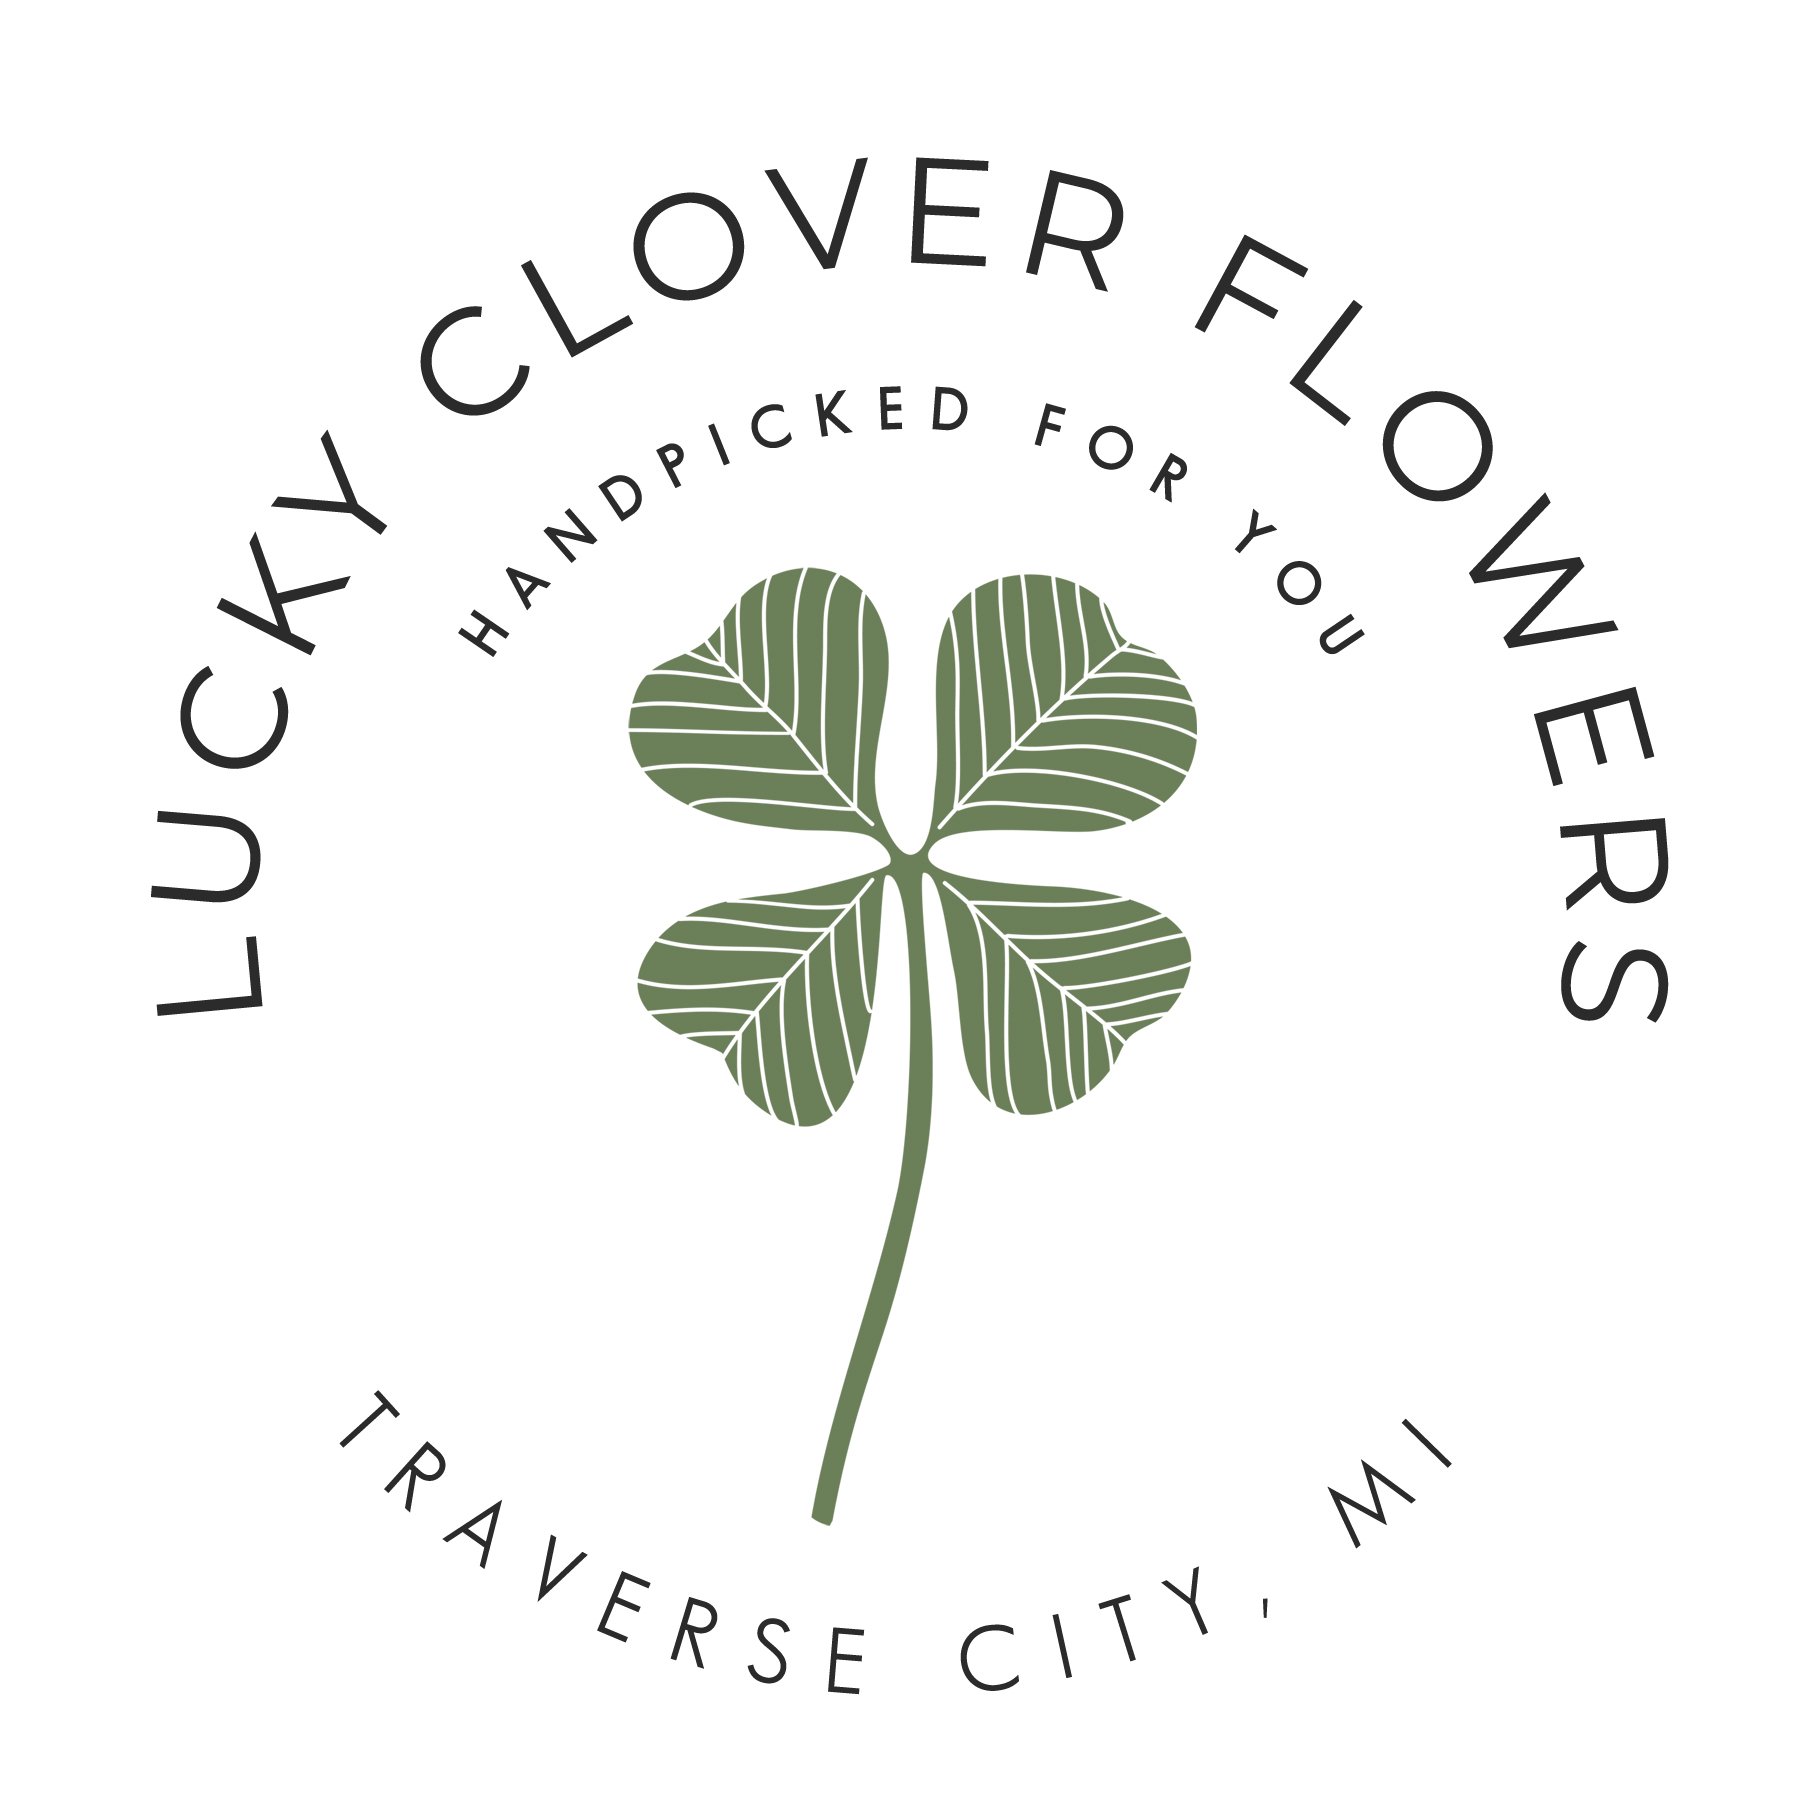 Lucky Clover Flowers